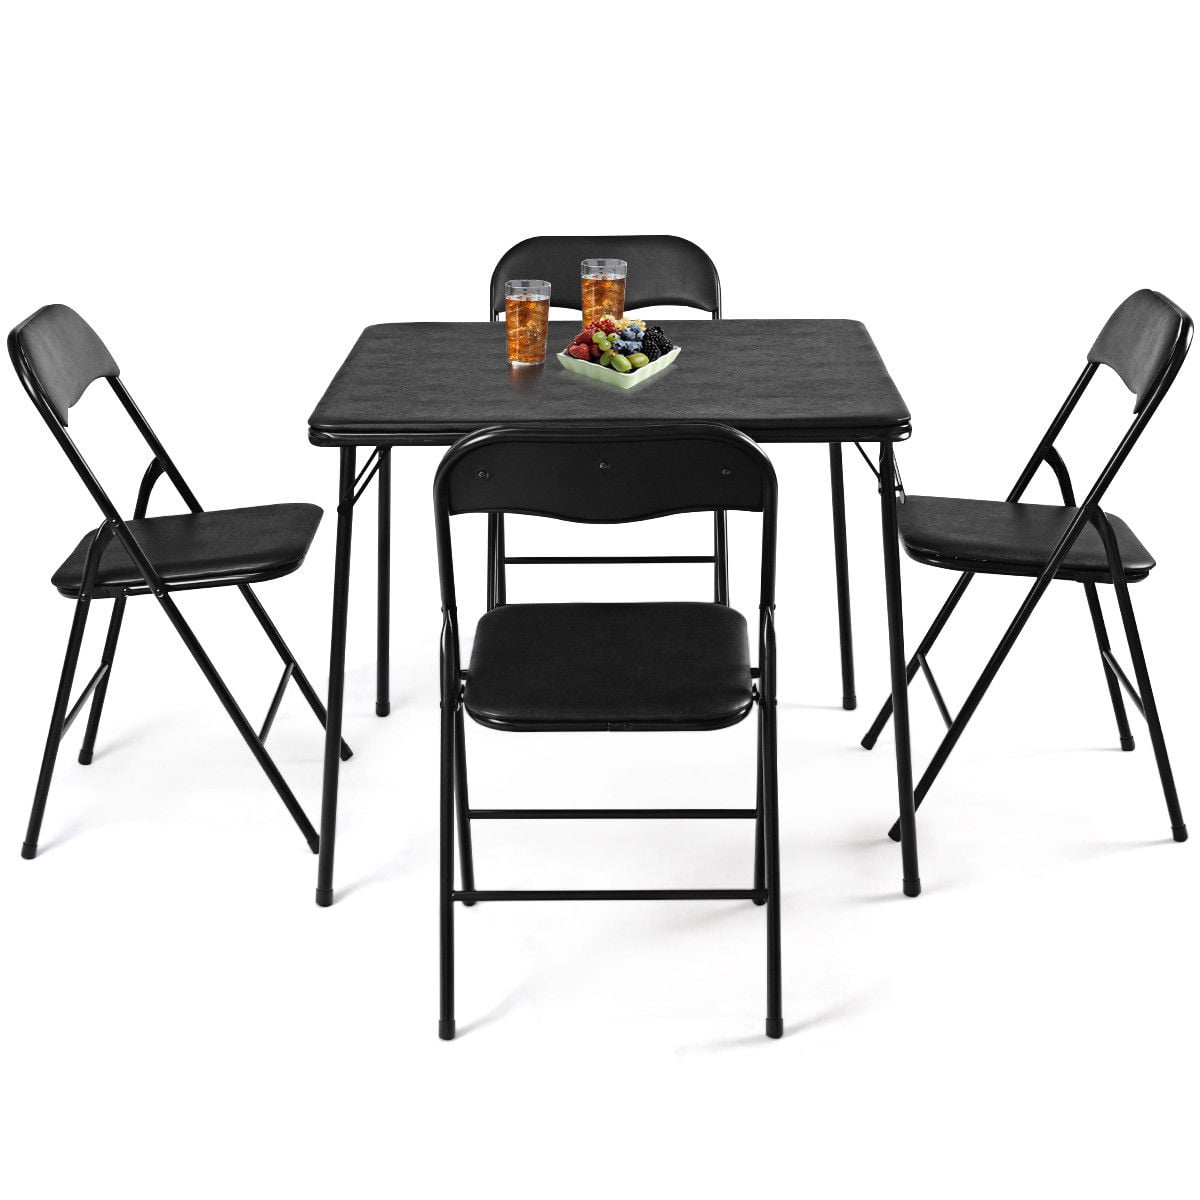 Costway 5PC Black Folding Table Chair Set Guest Games ...